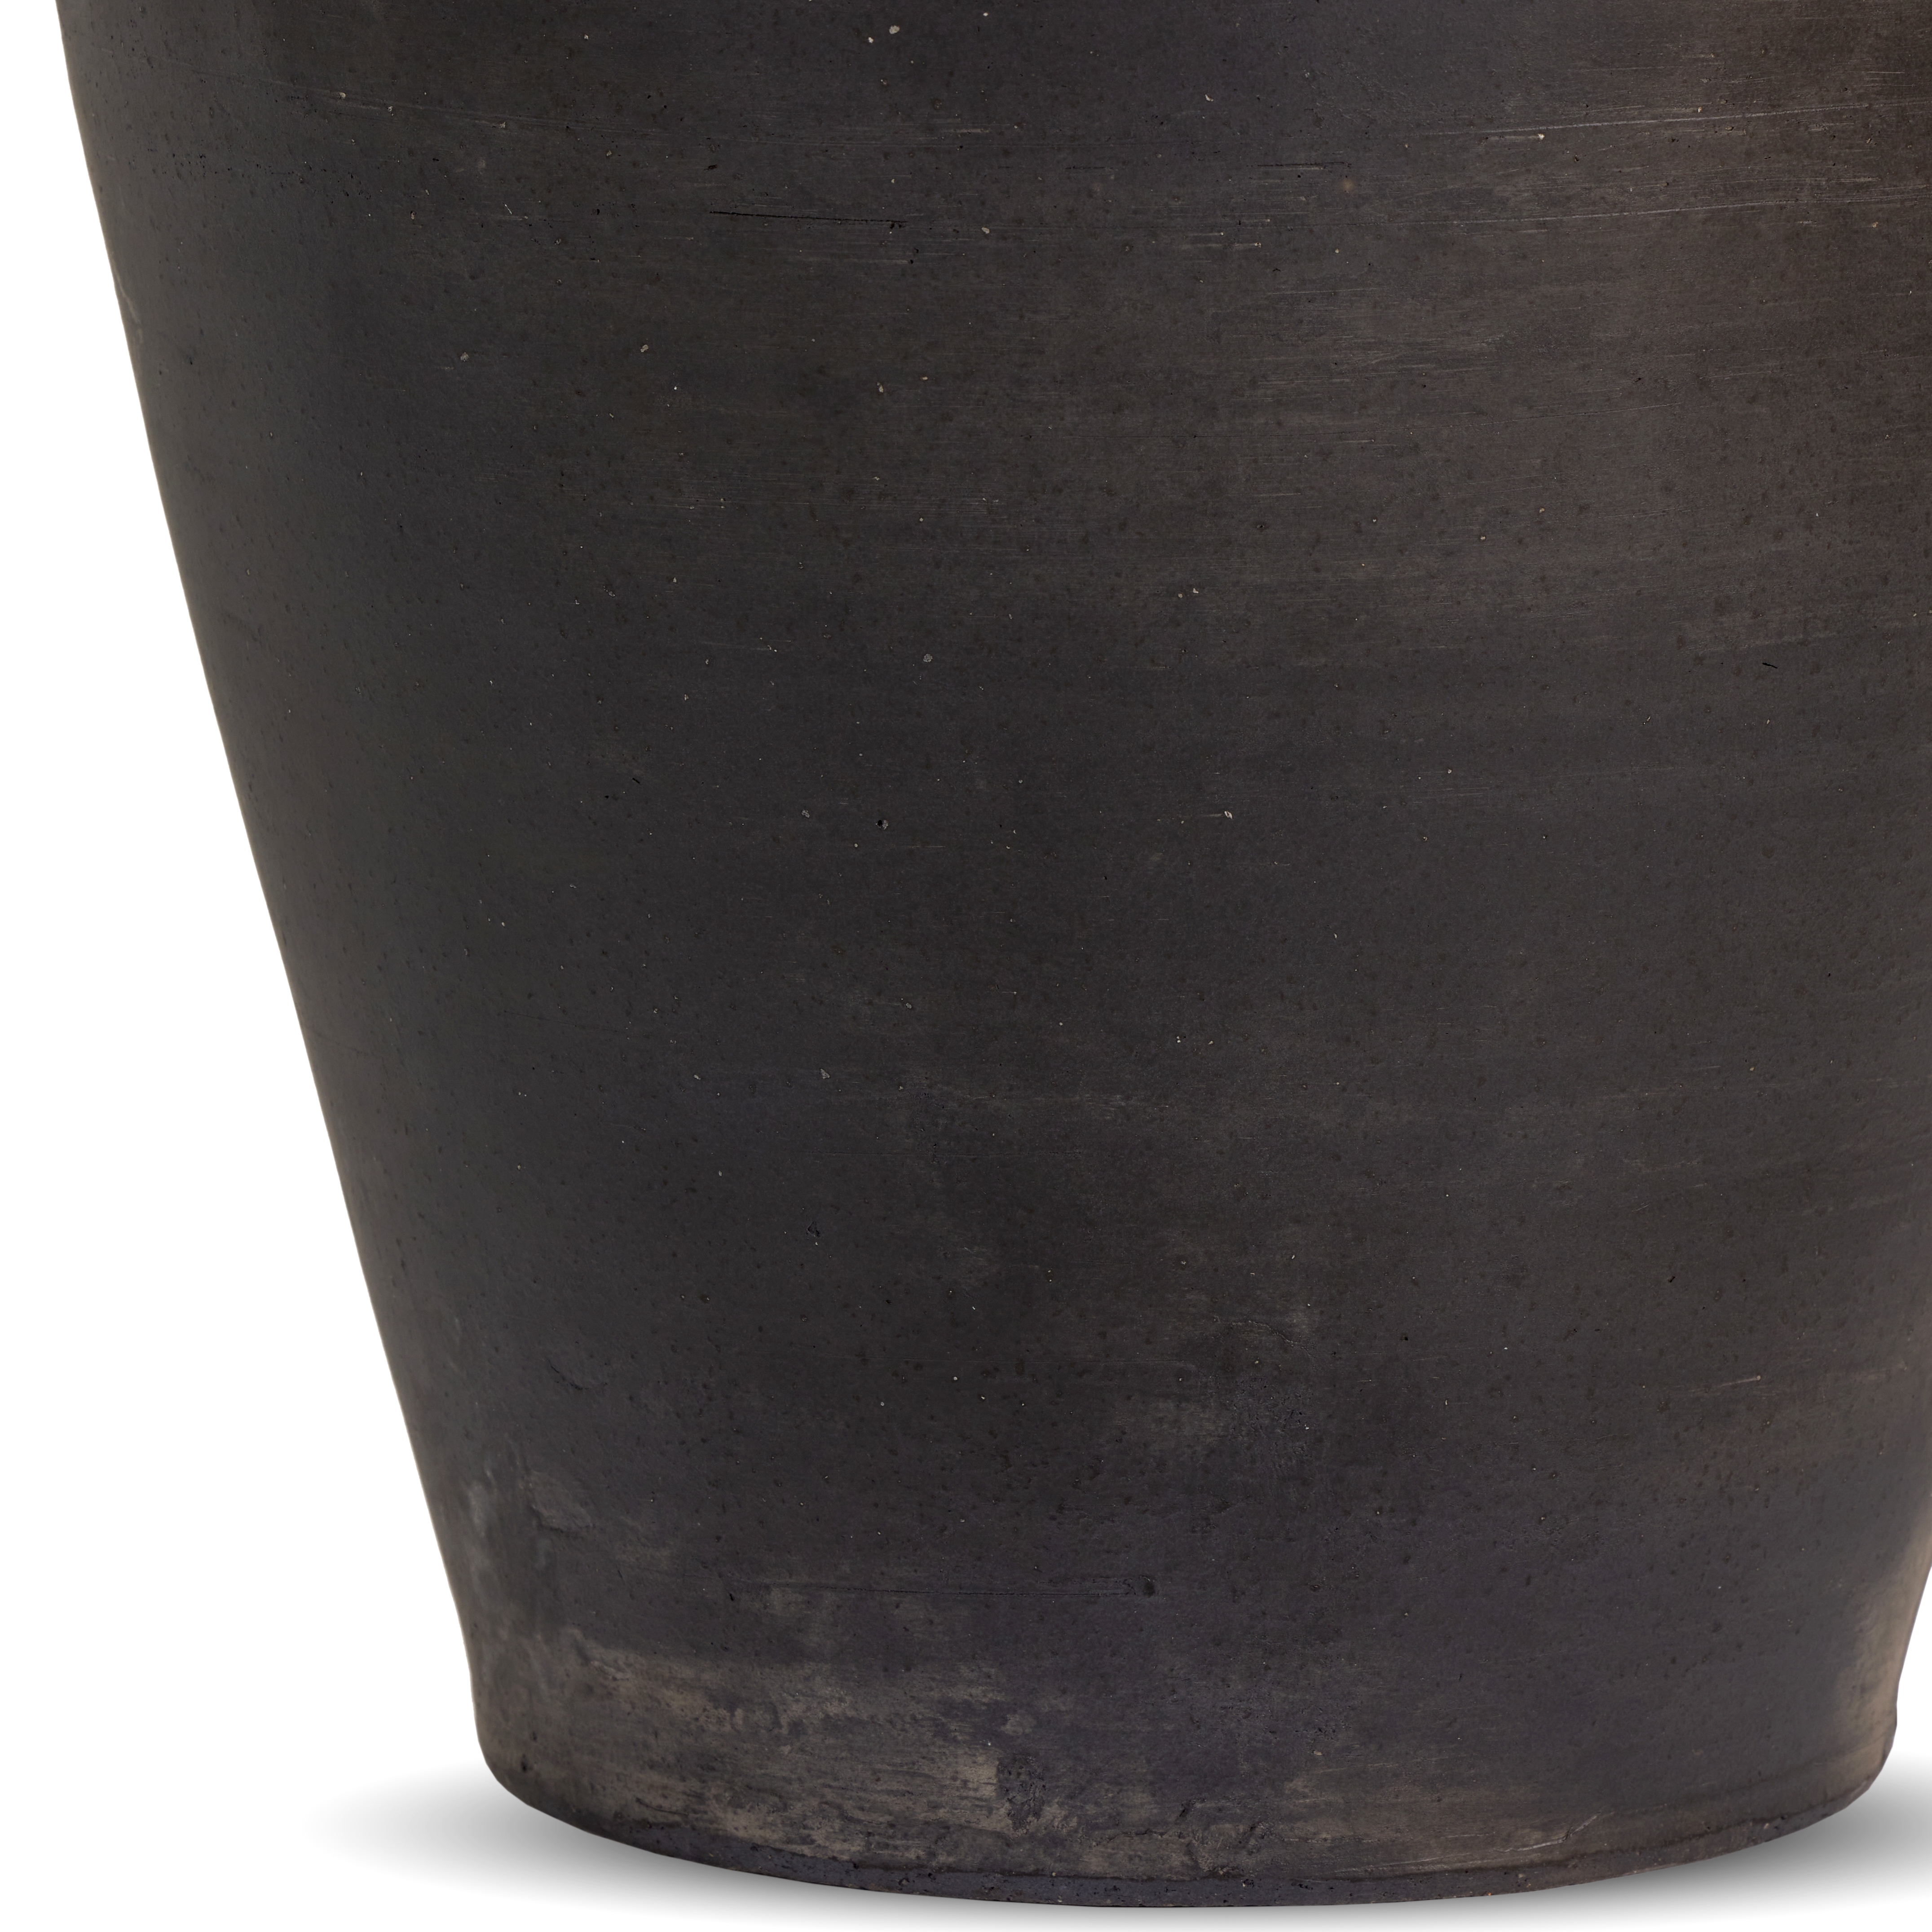 Kyland Vase-Aged Black Ceramic - Image 2